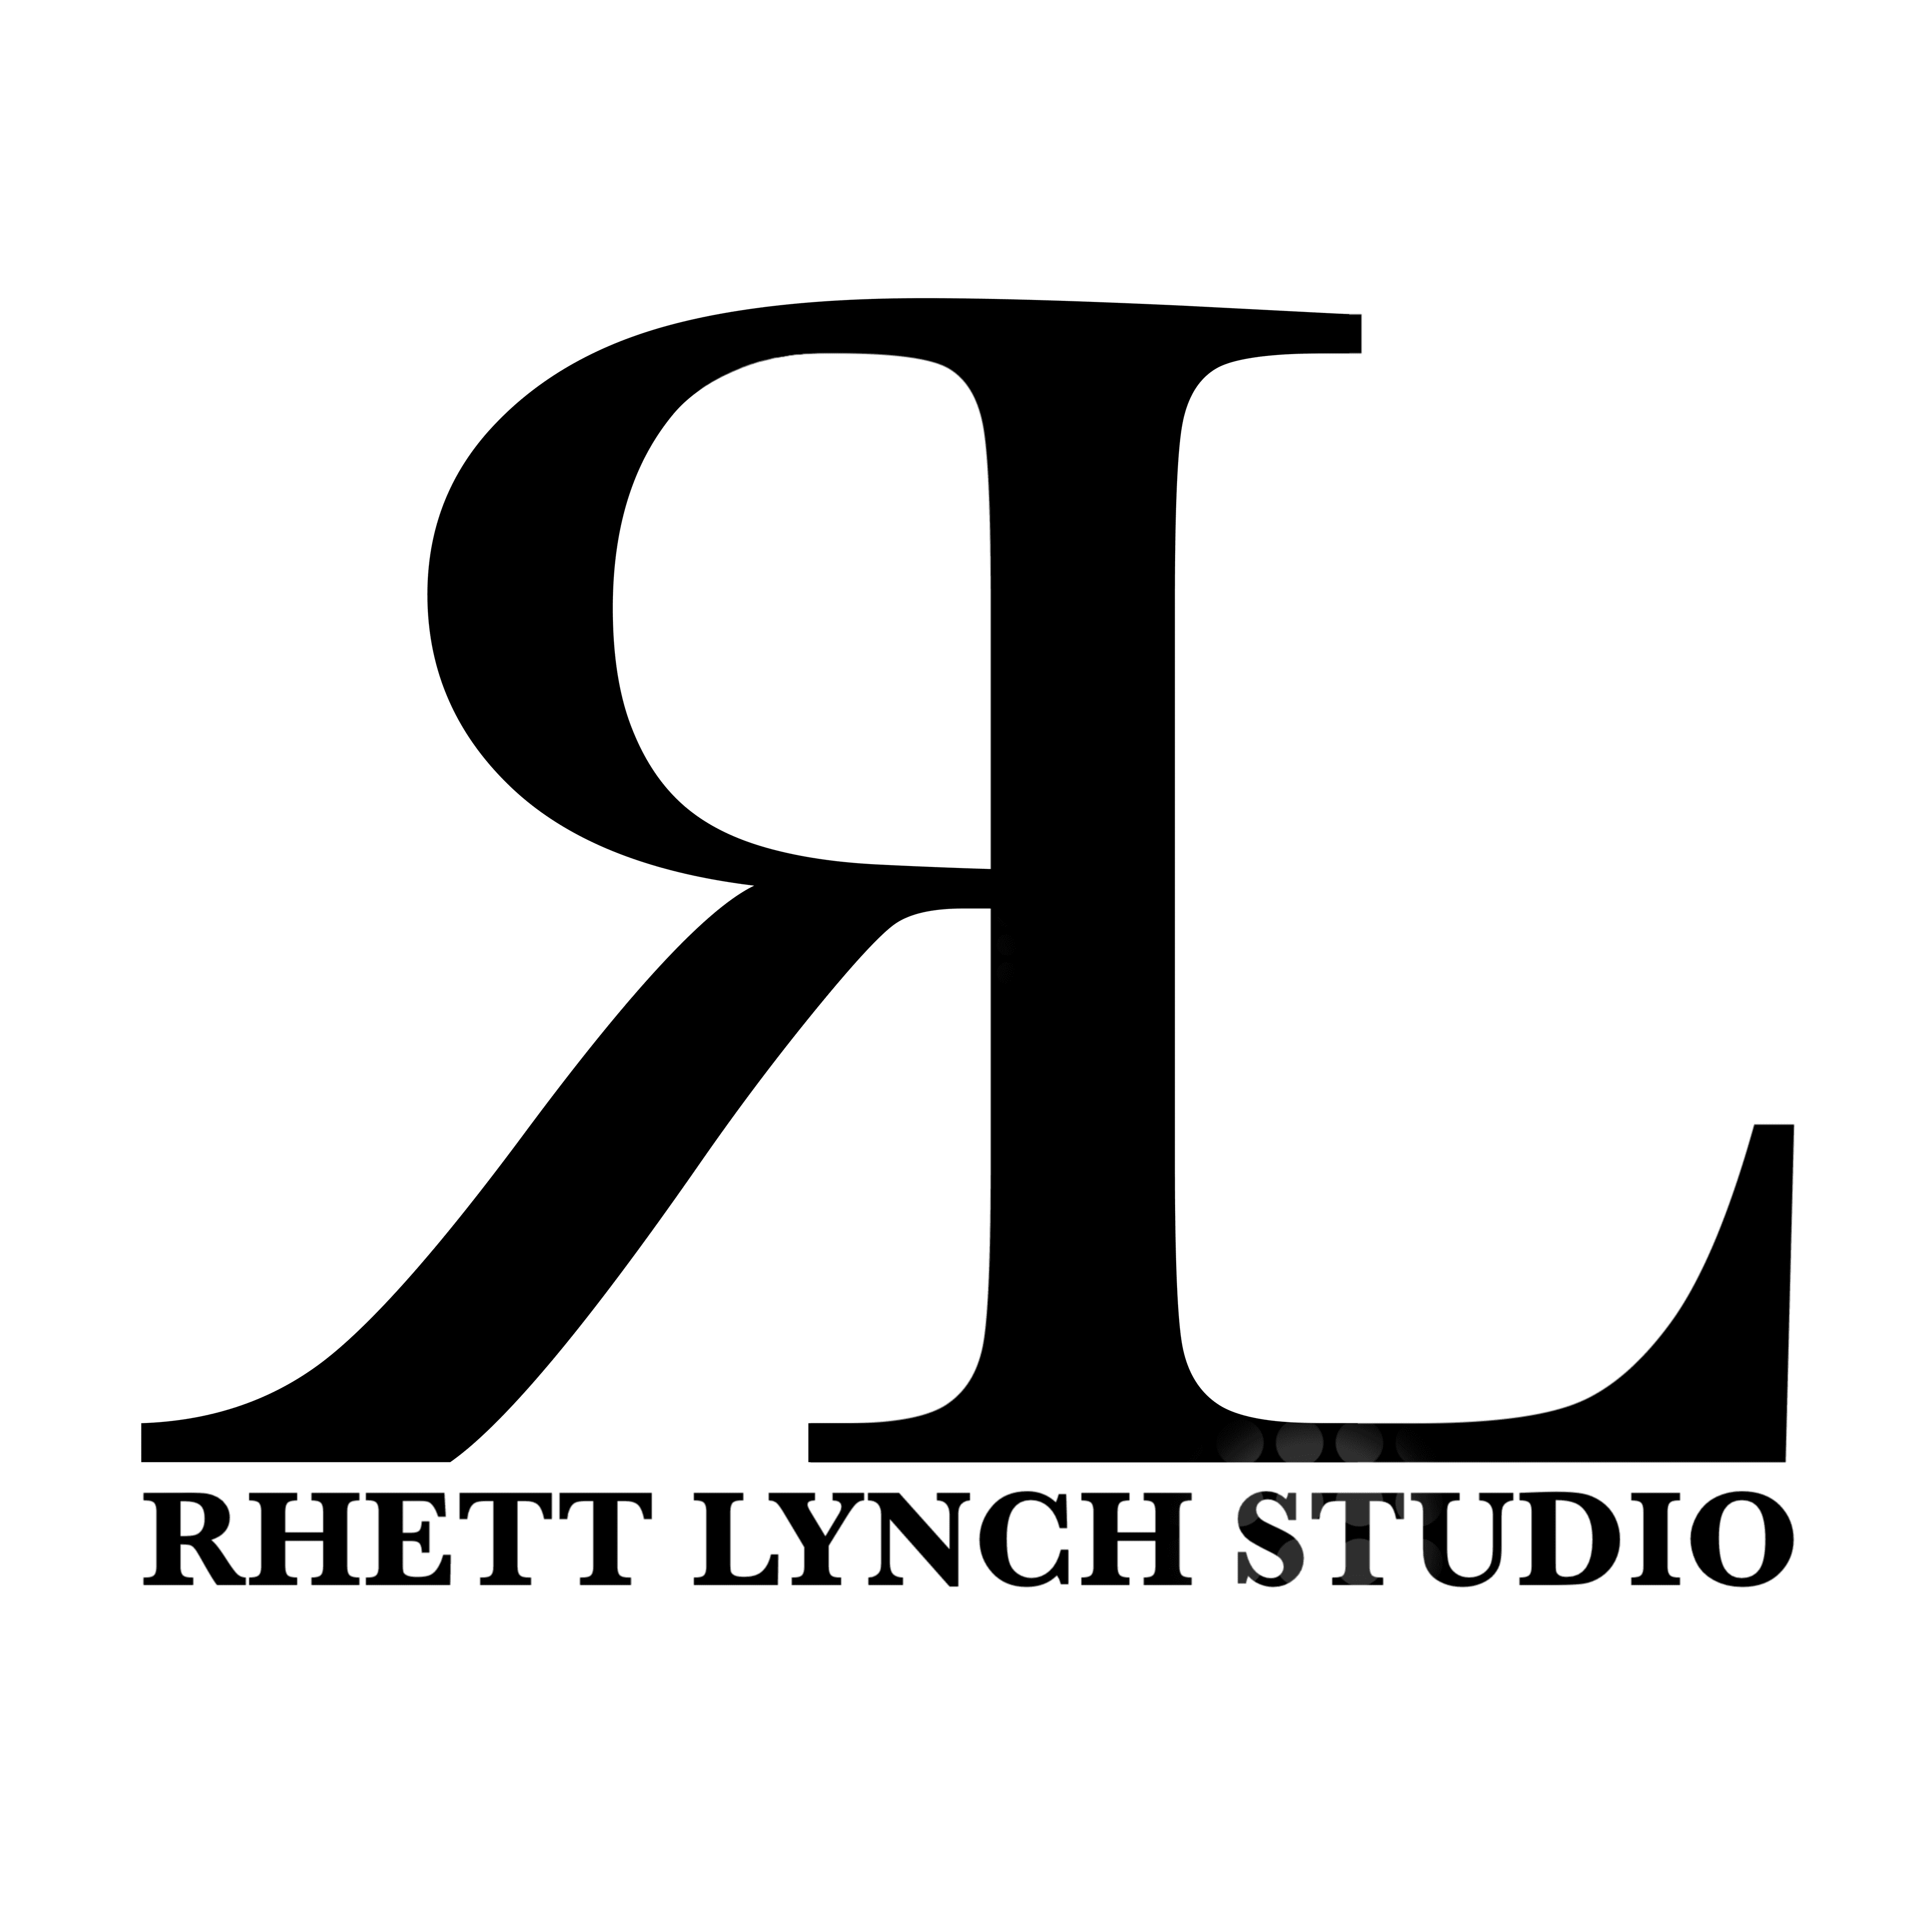 RhettLynch